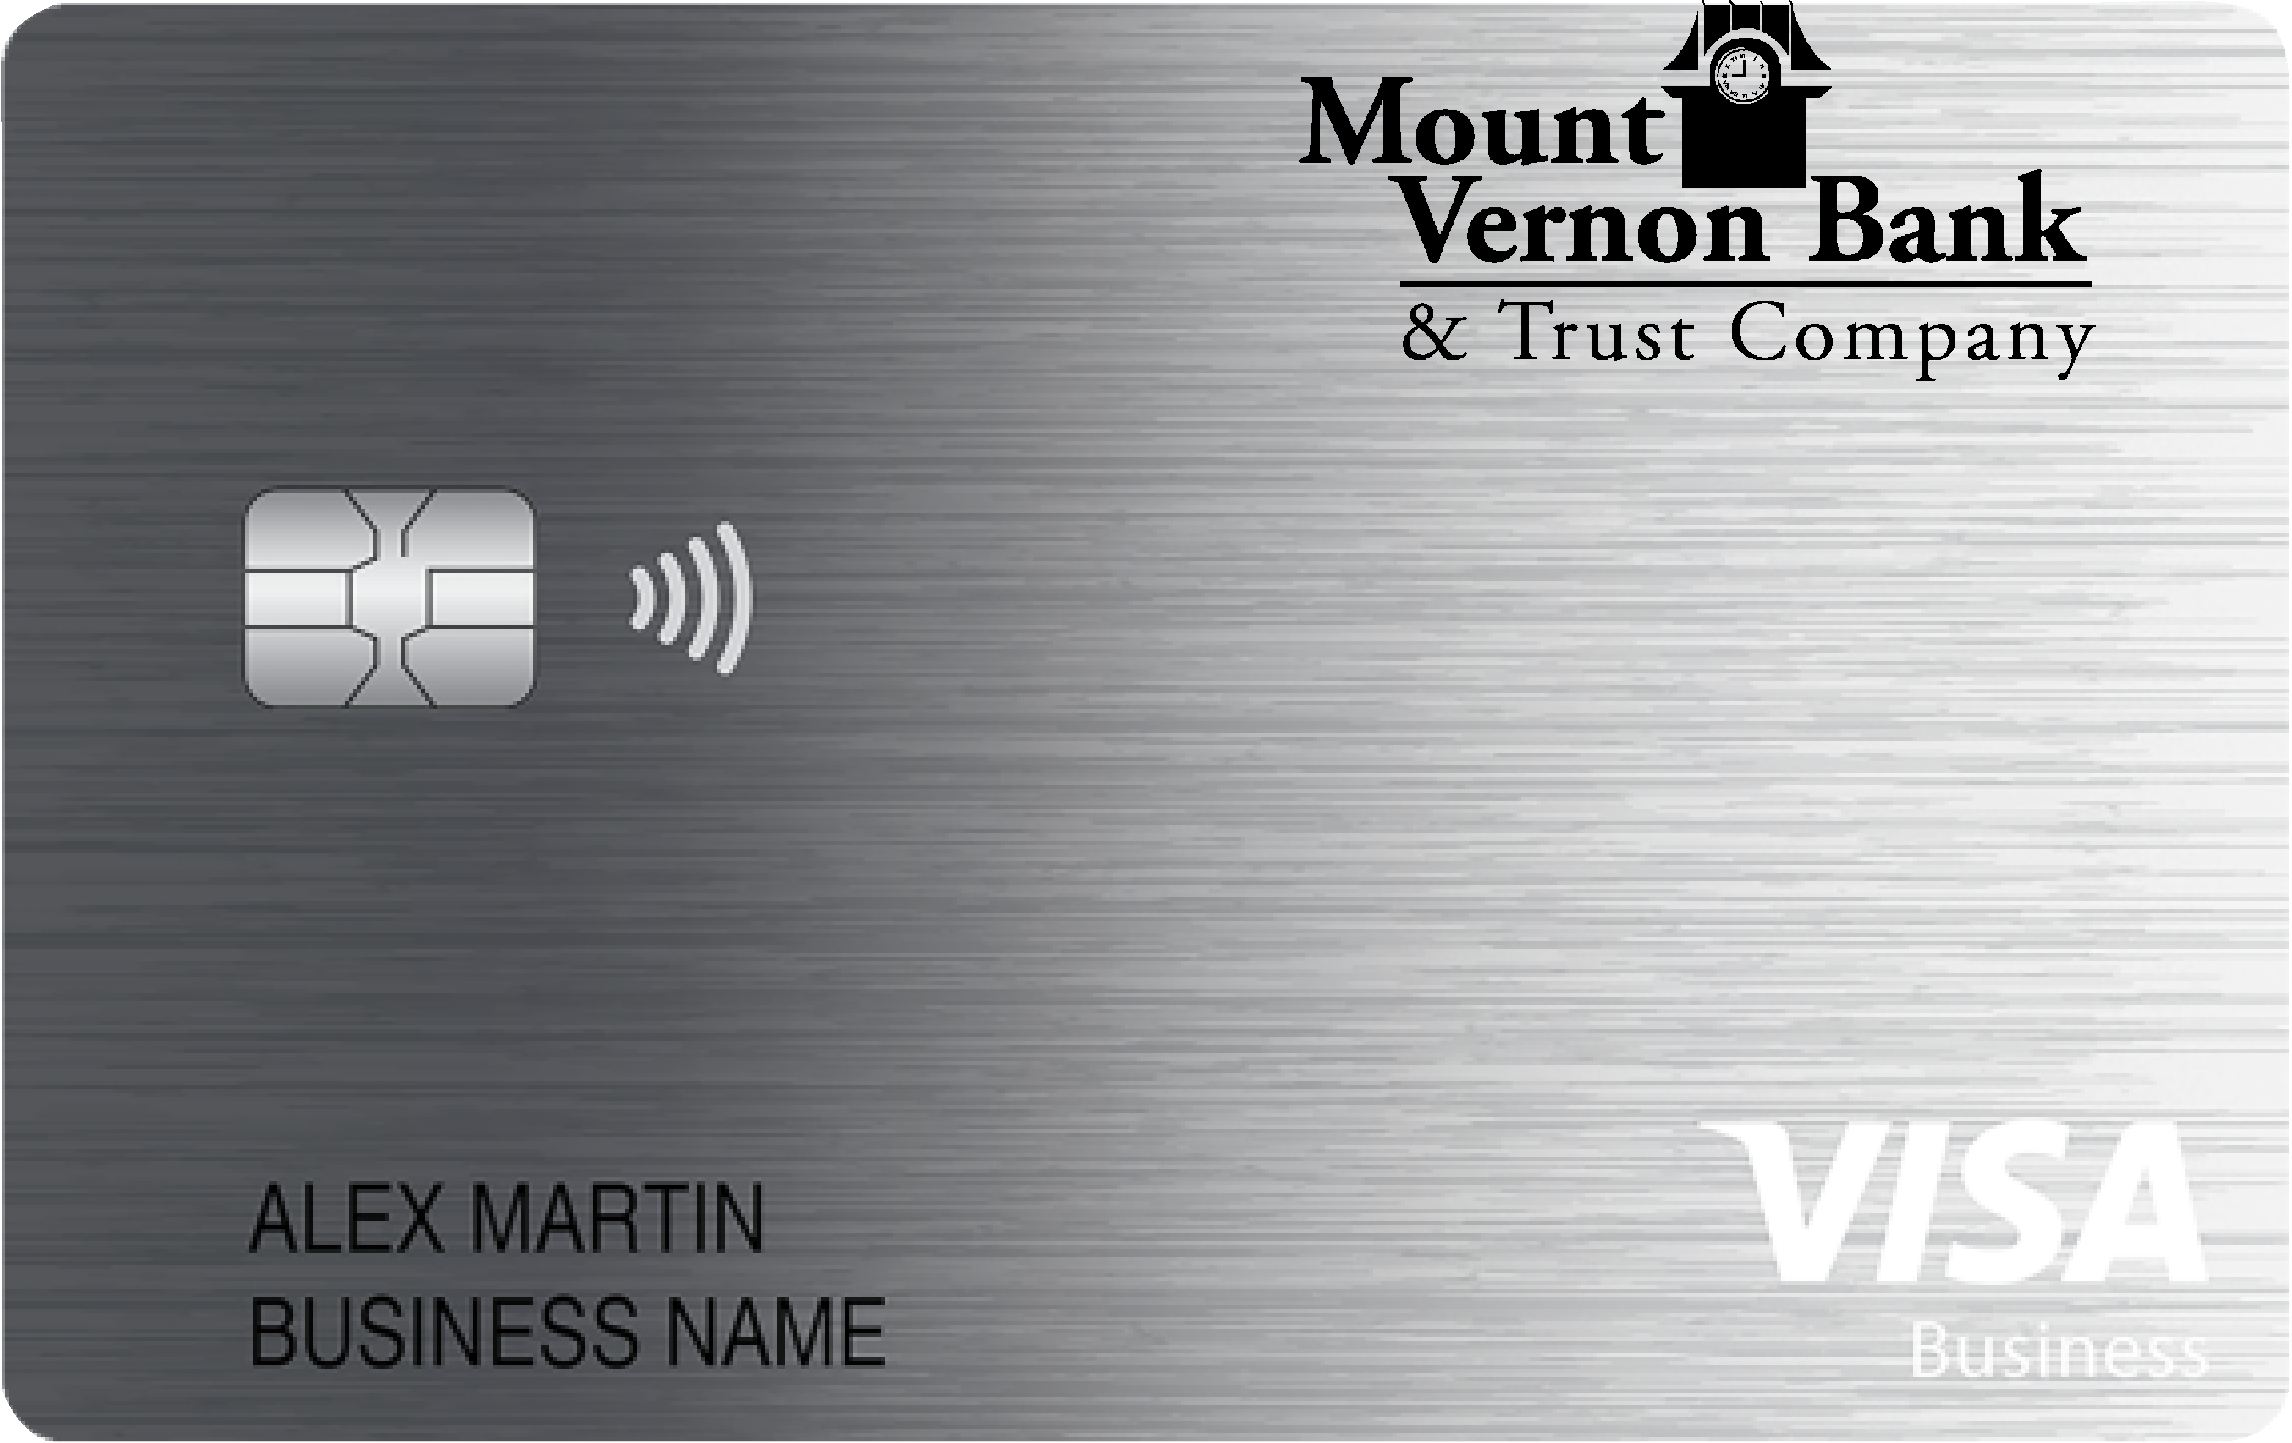 Mount Vernon Bank & Trust